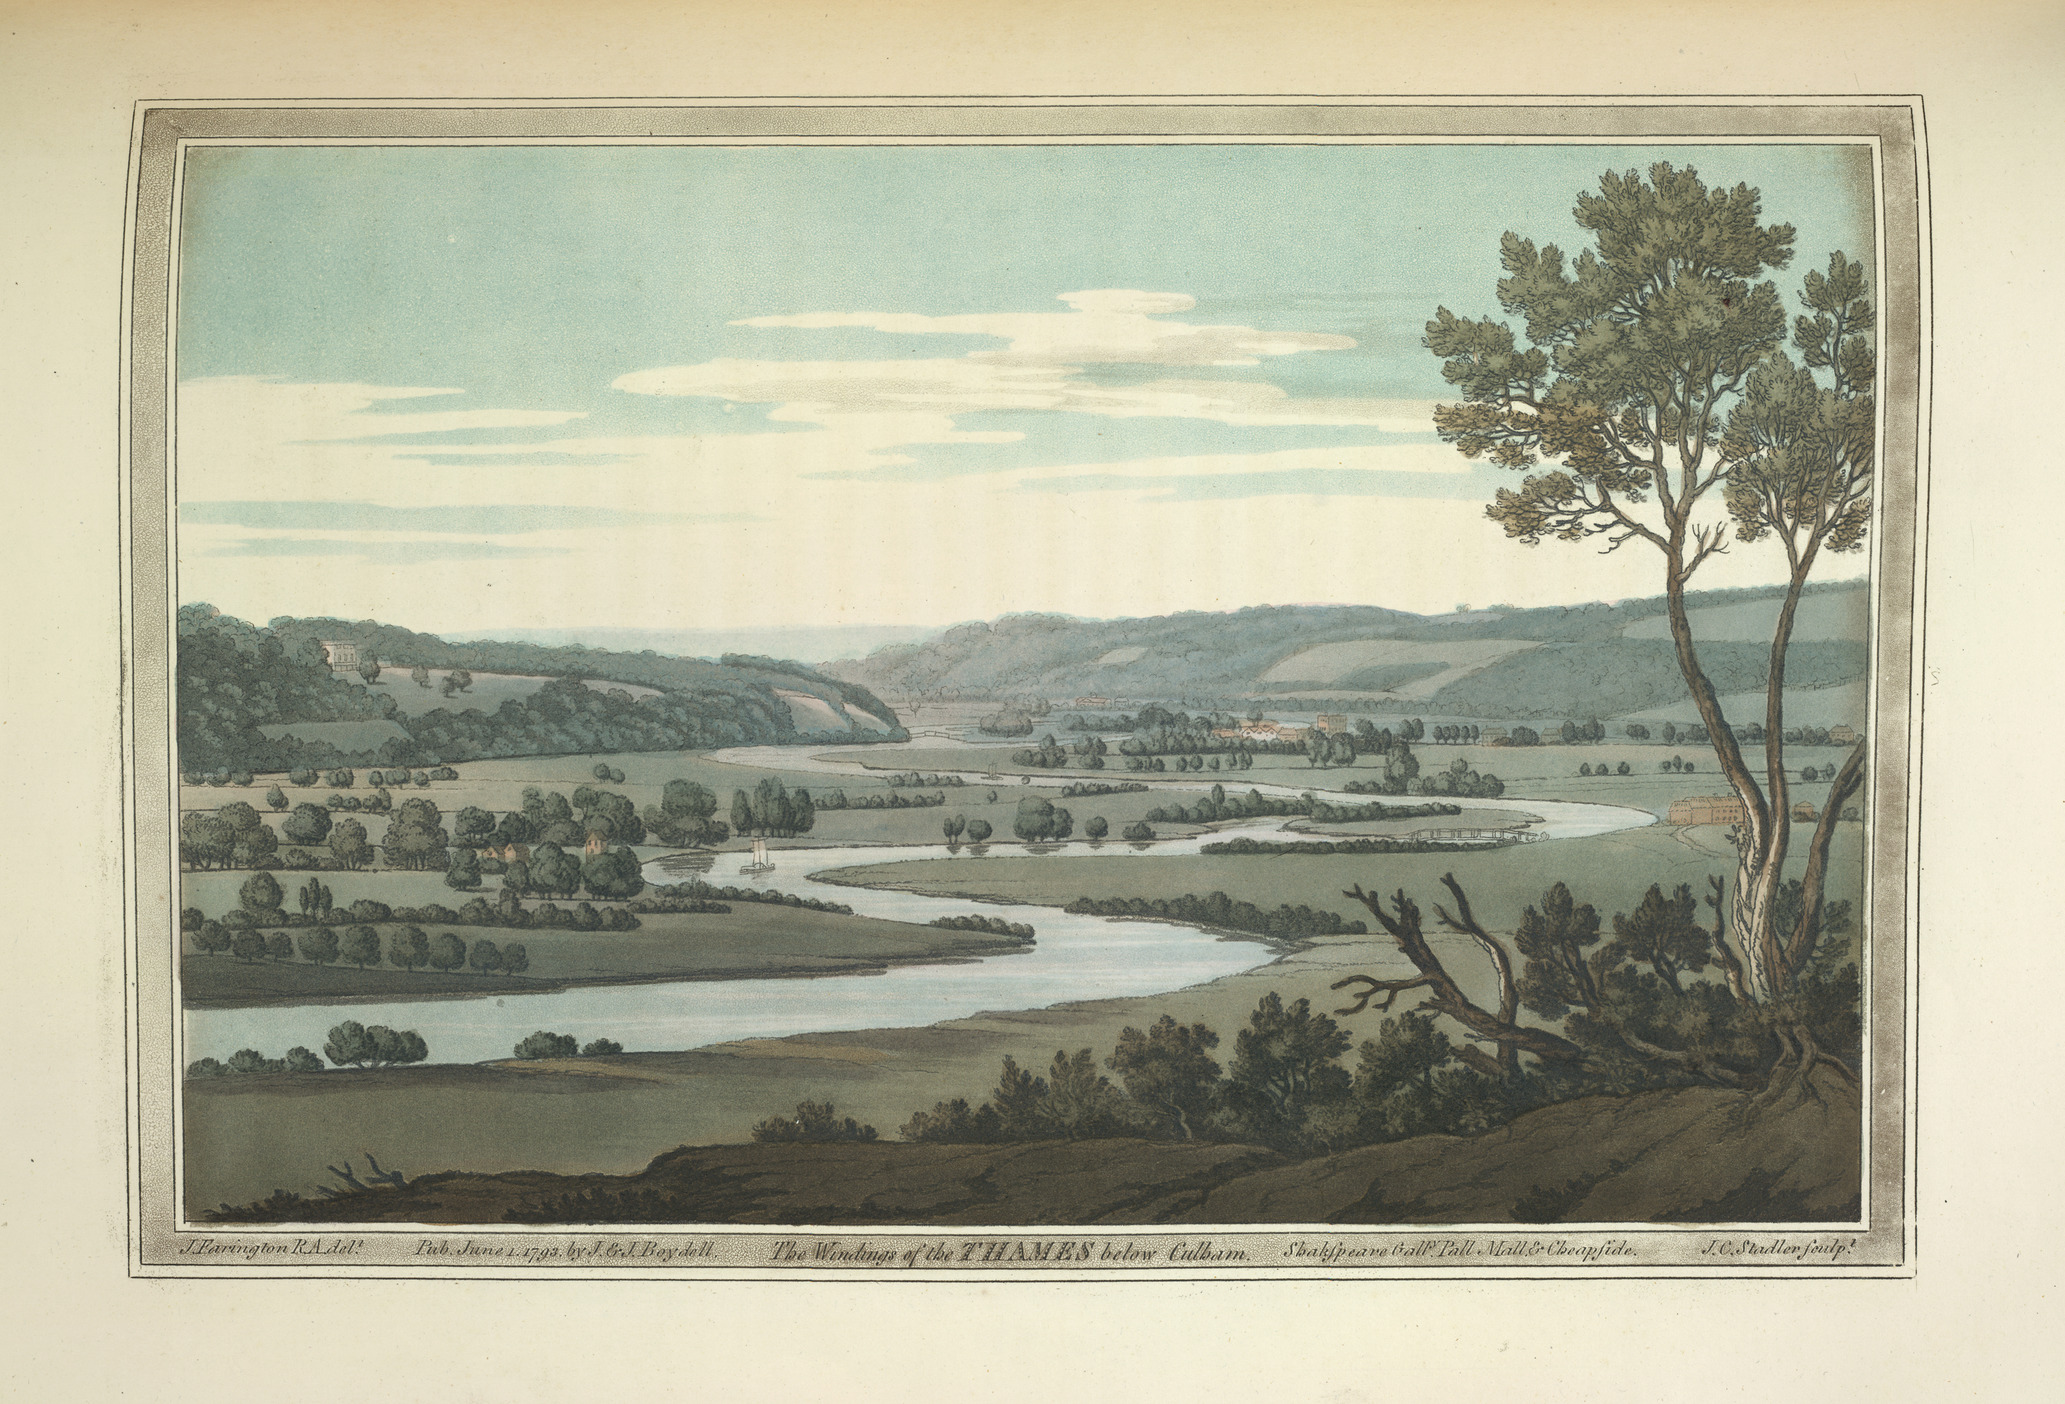 A landscape painting of the era that resembles the description in Flaubert's novel